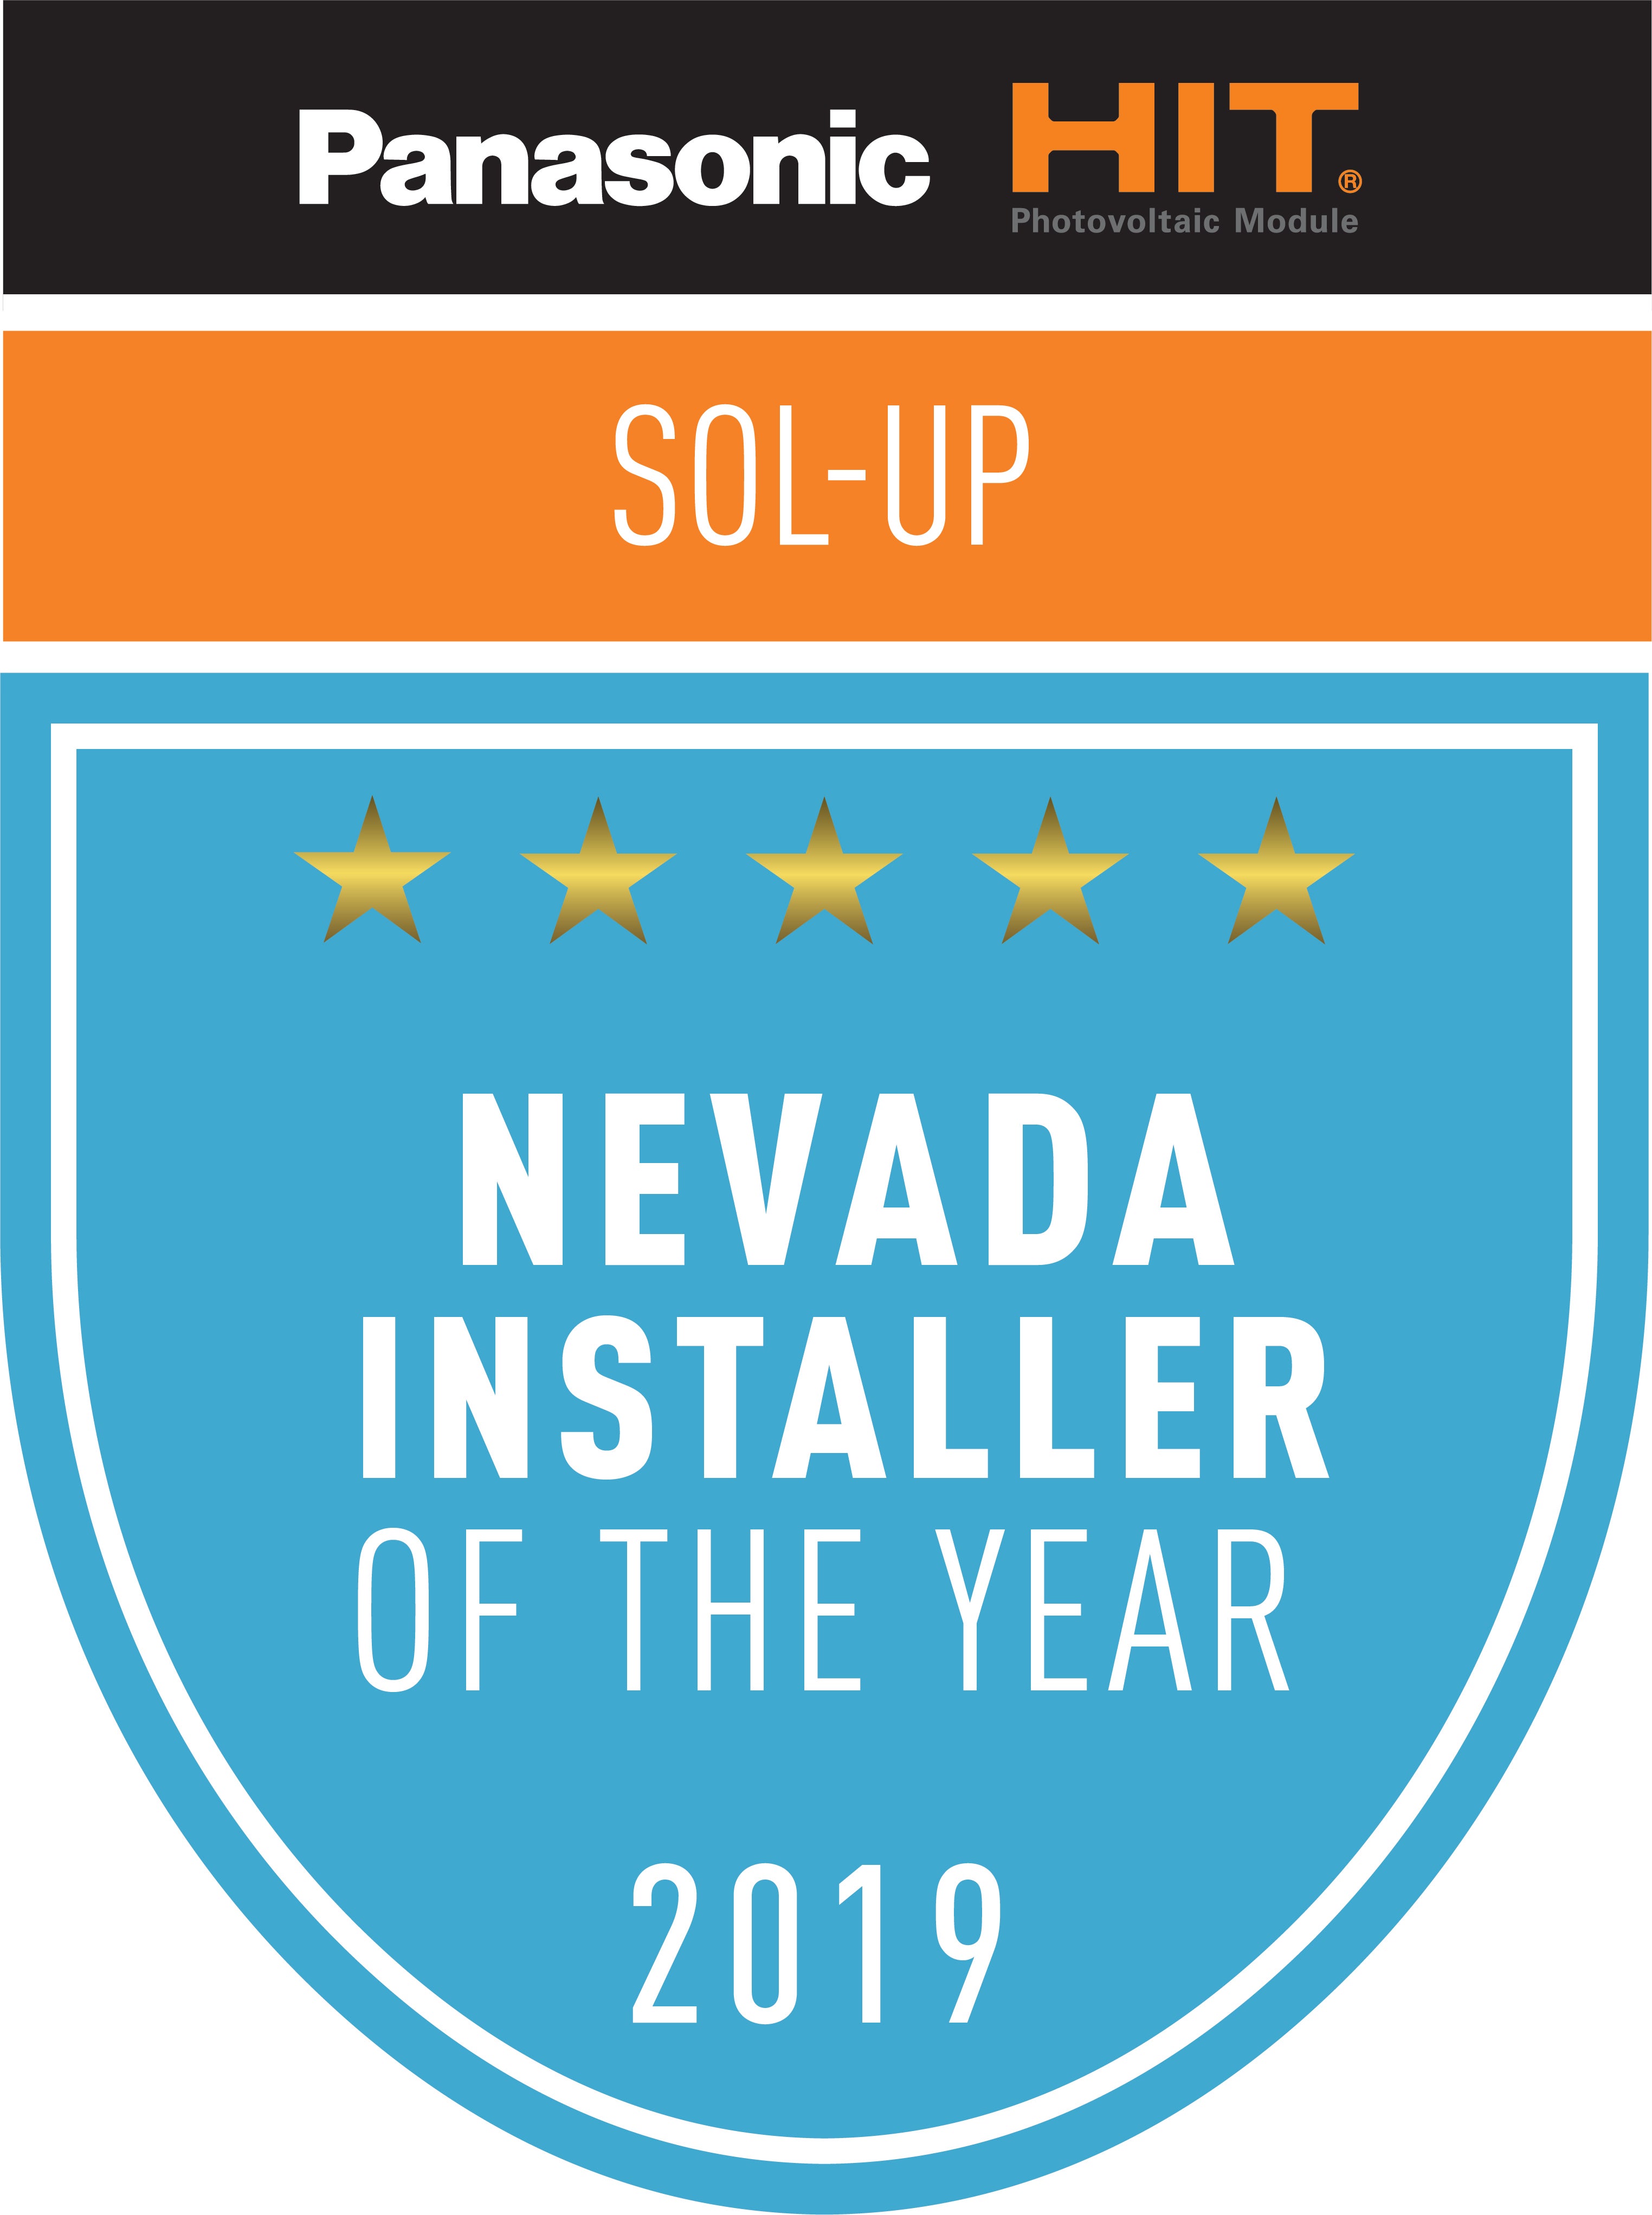 Panasonic Authorized Installer of the Year - Nevada